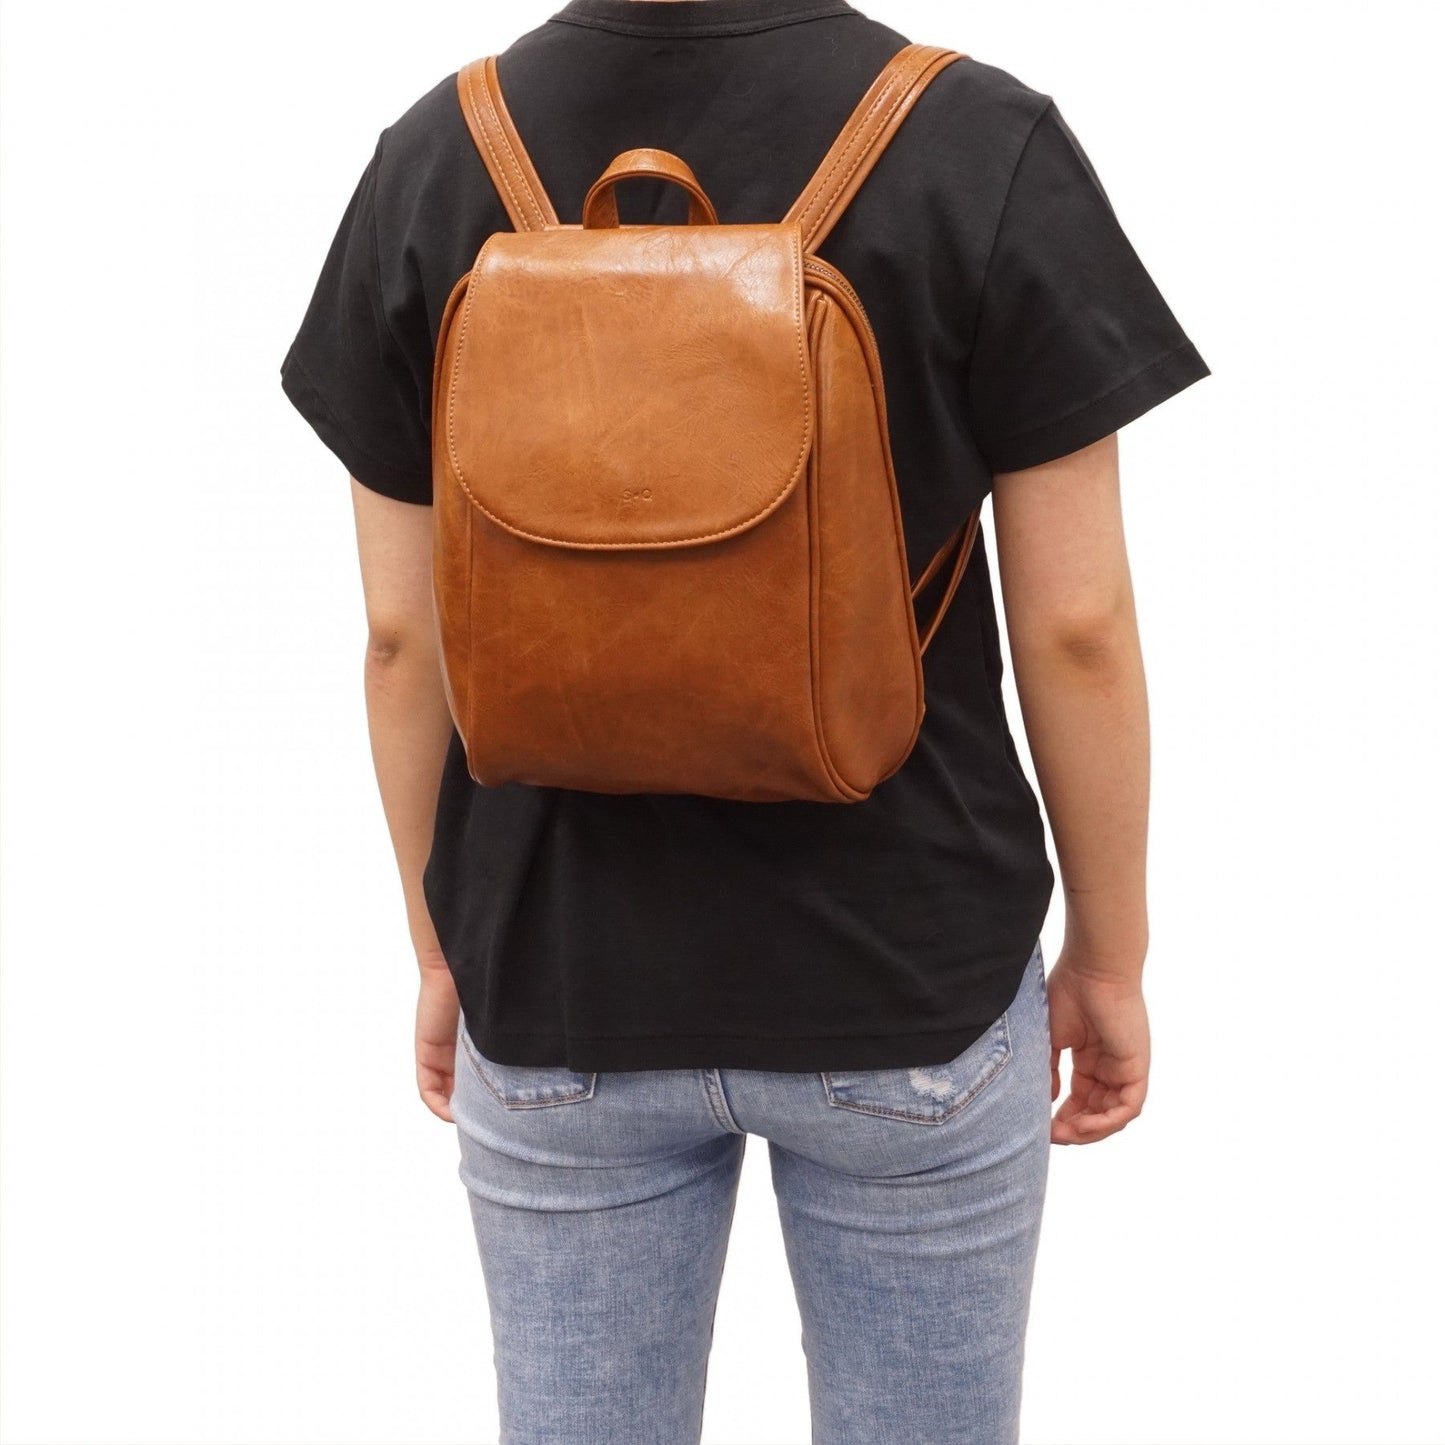 Convertible Backpack - "Jada"